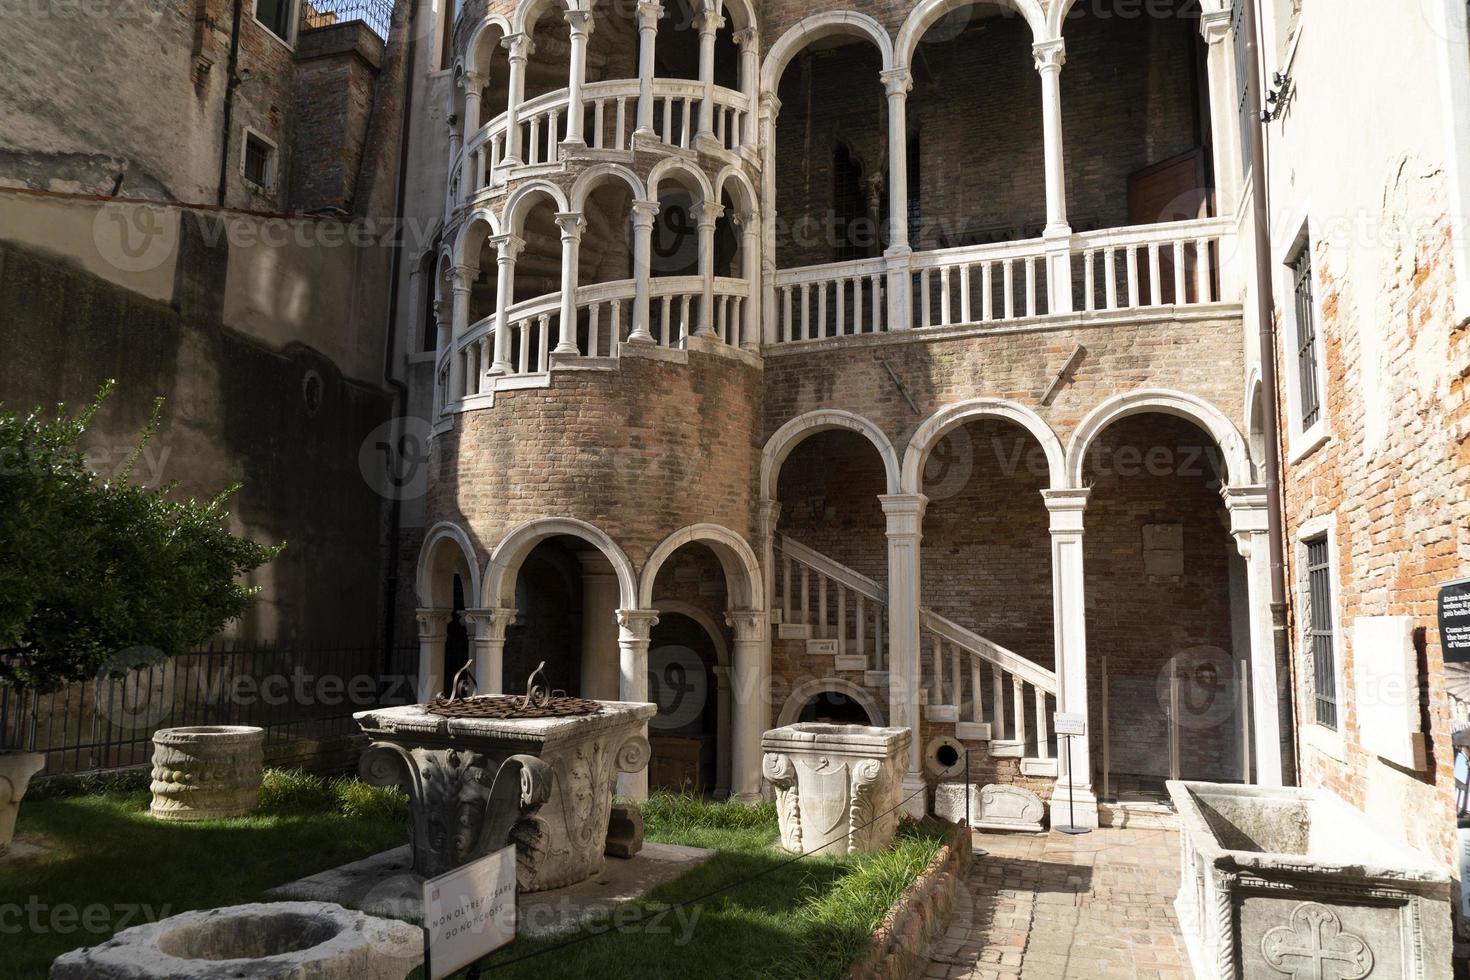 contarini del bovolo palacio venecia escalera foto